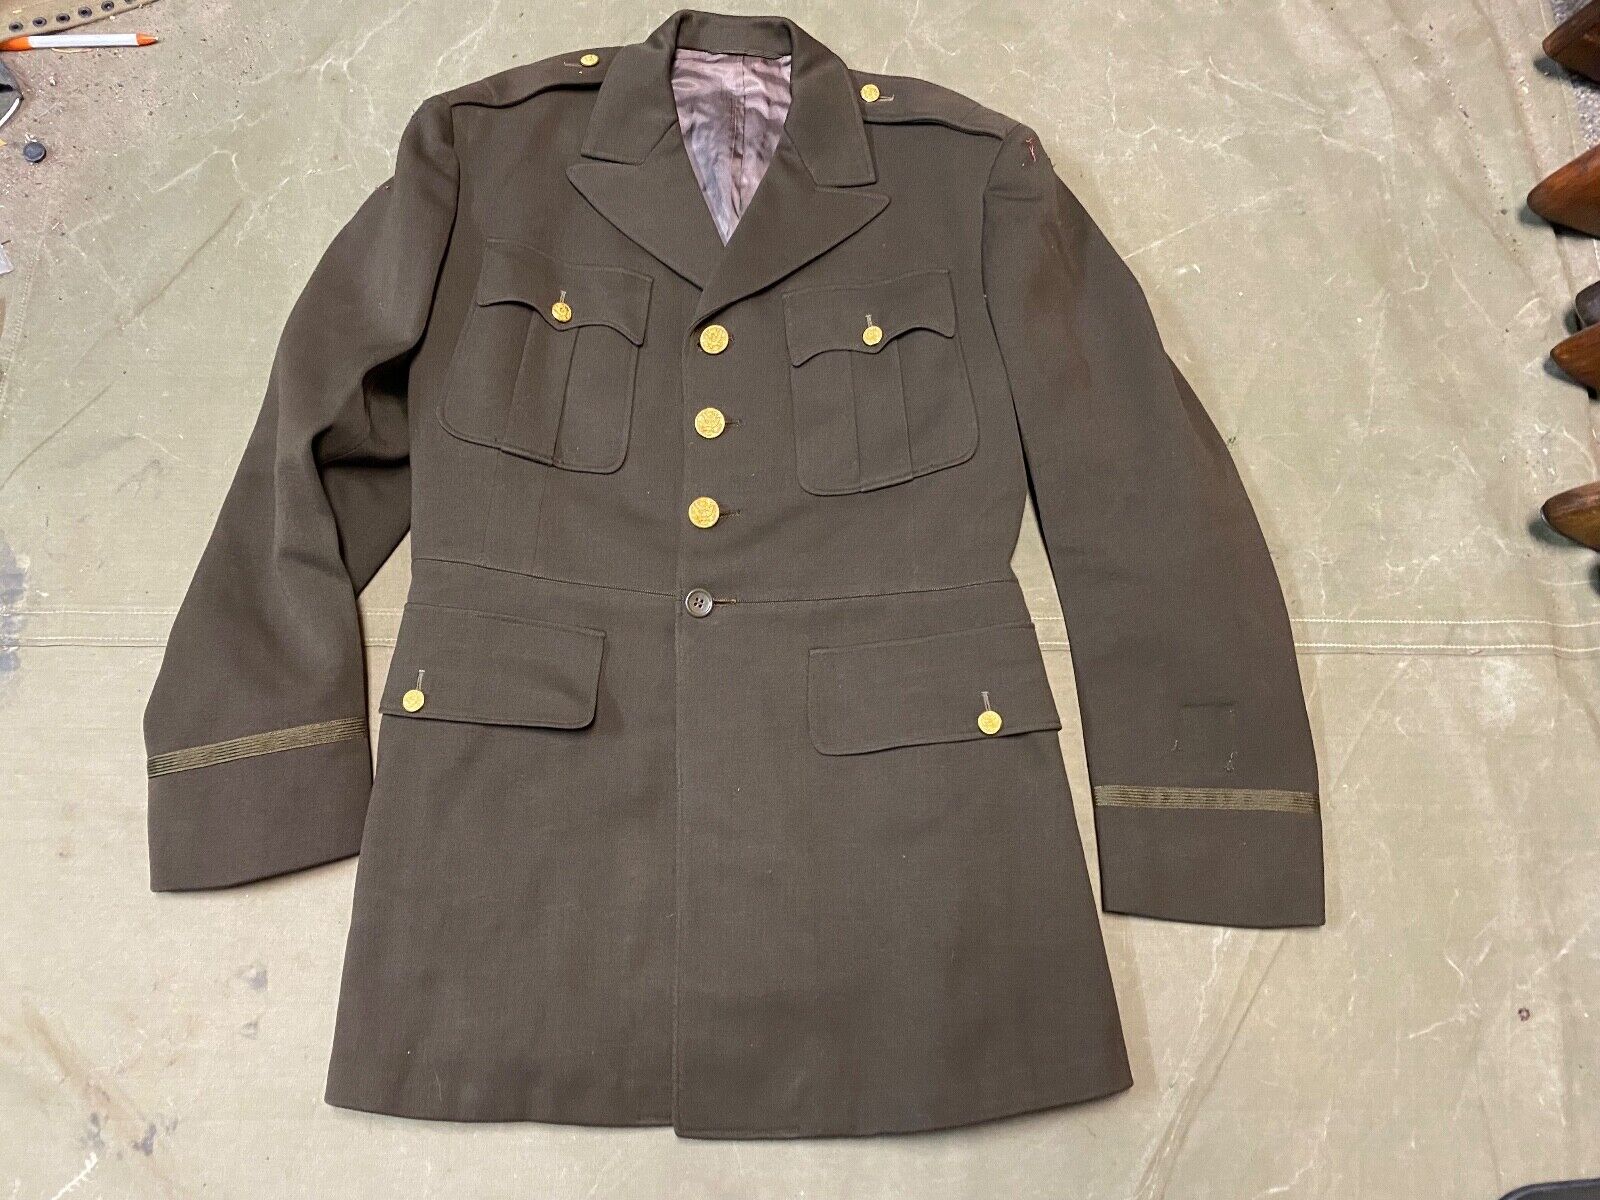 ORIGINAL WWII US ARMY OFFICER CLASS A DRESS JACKET- MEDIUM/LARGE 42R